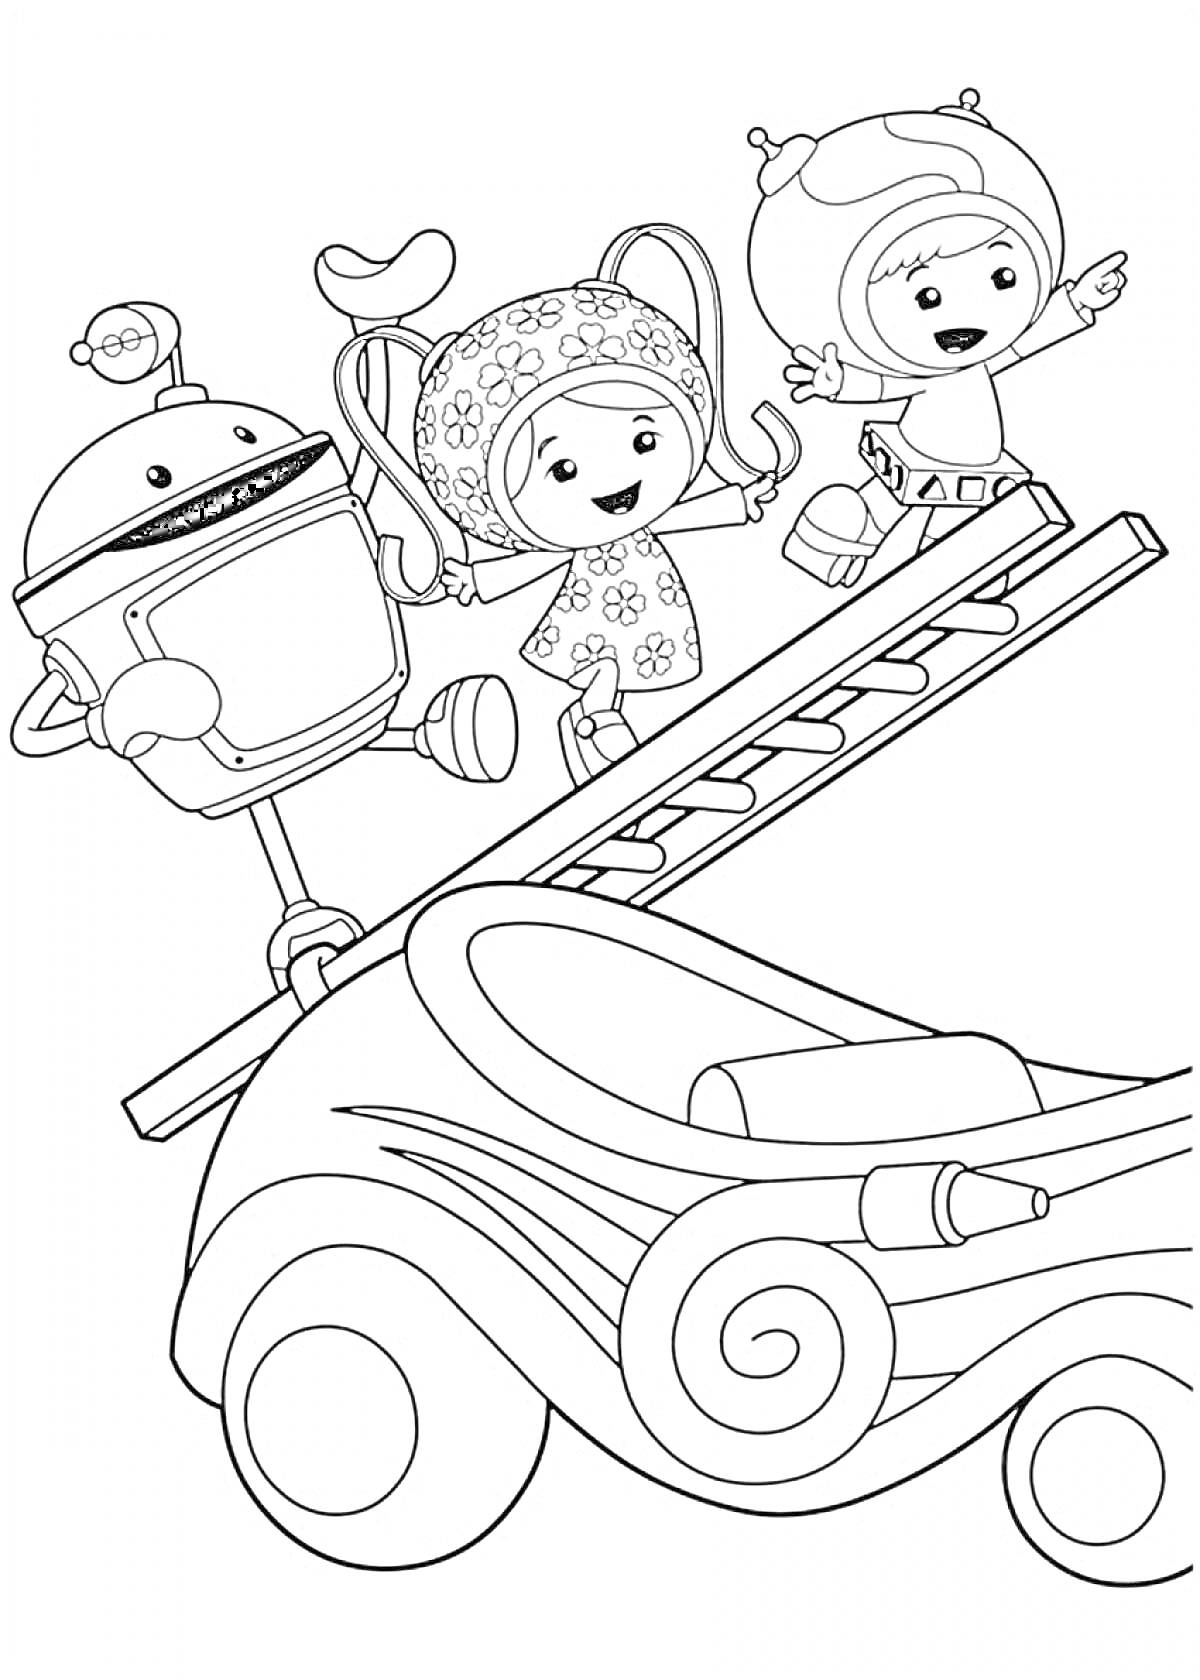 Персонажи Умизуми с роботом на лестнице в машине